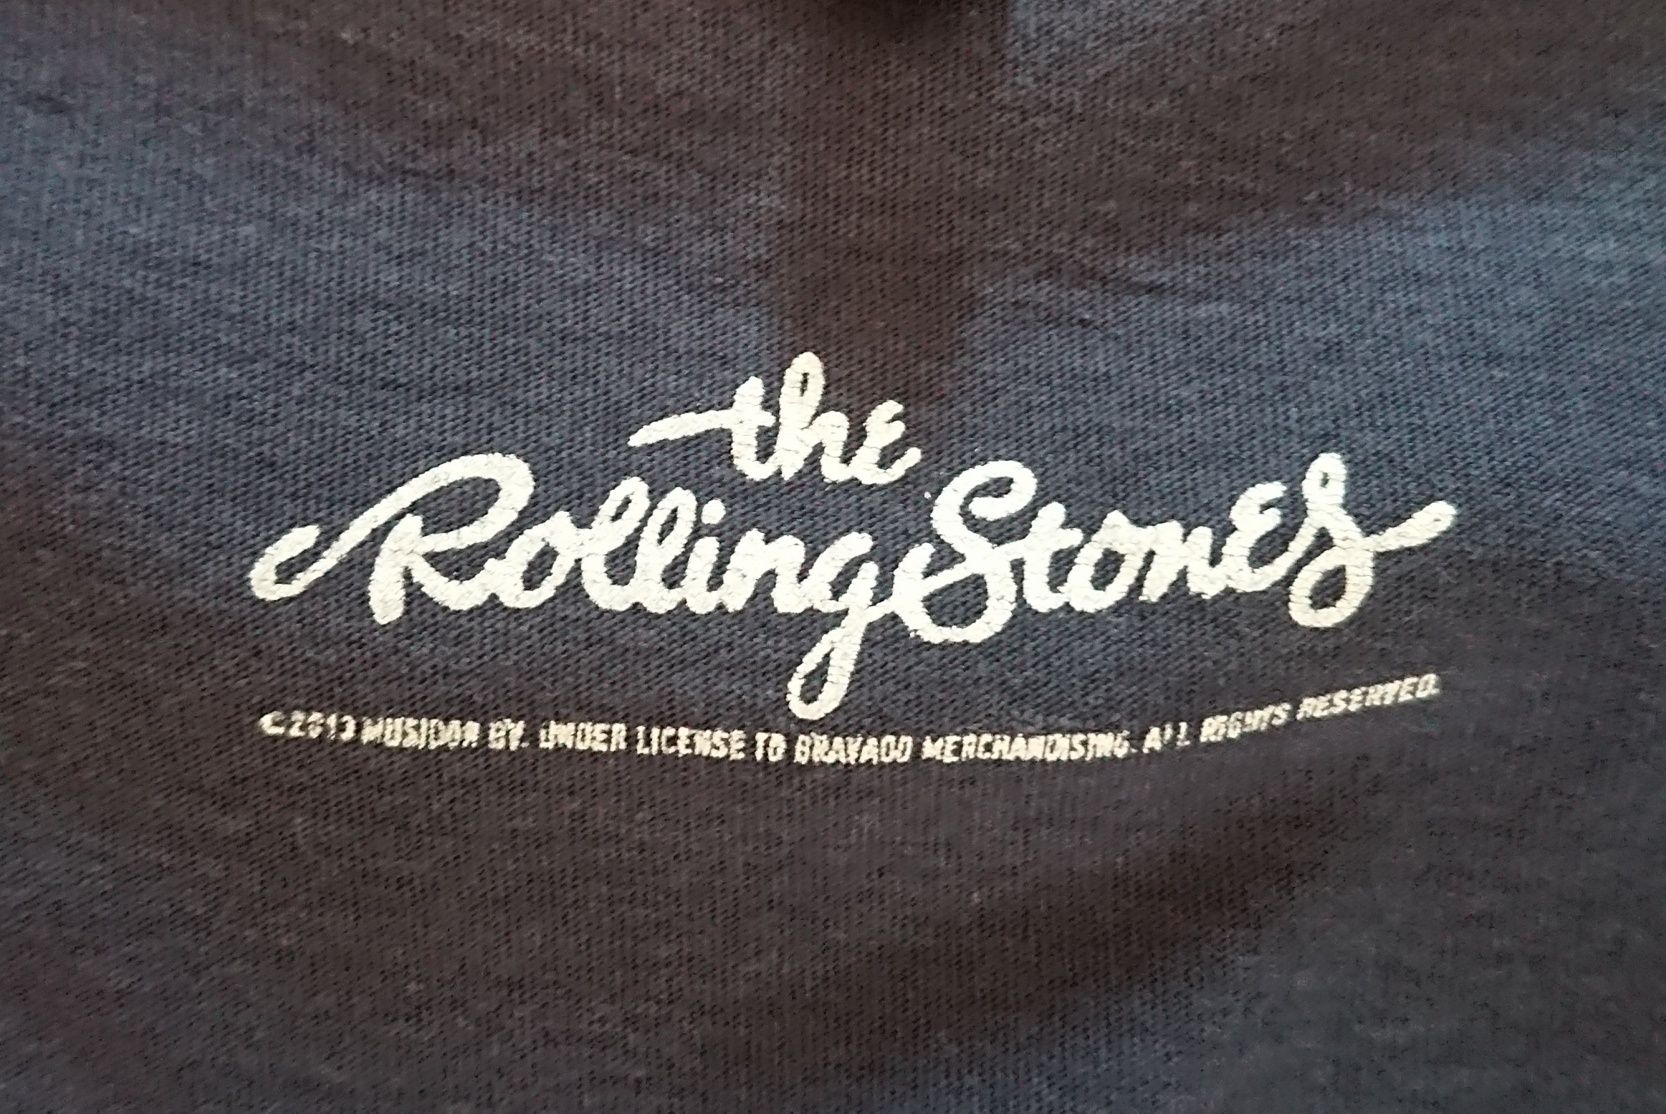 The Rolling Stones oficjalny t-shirt 2013